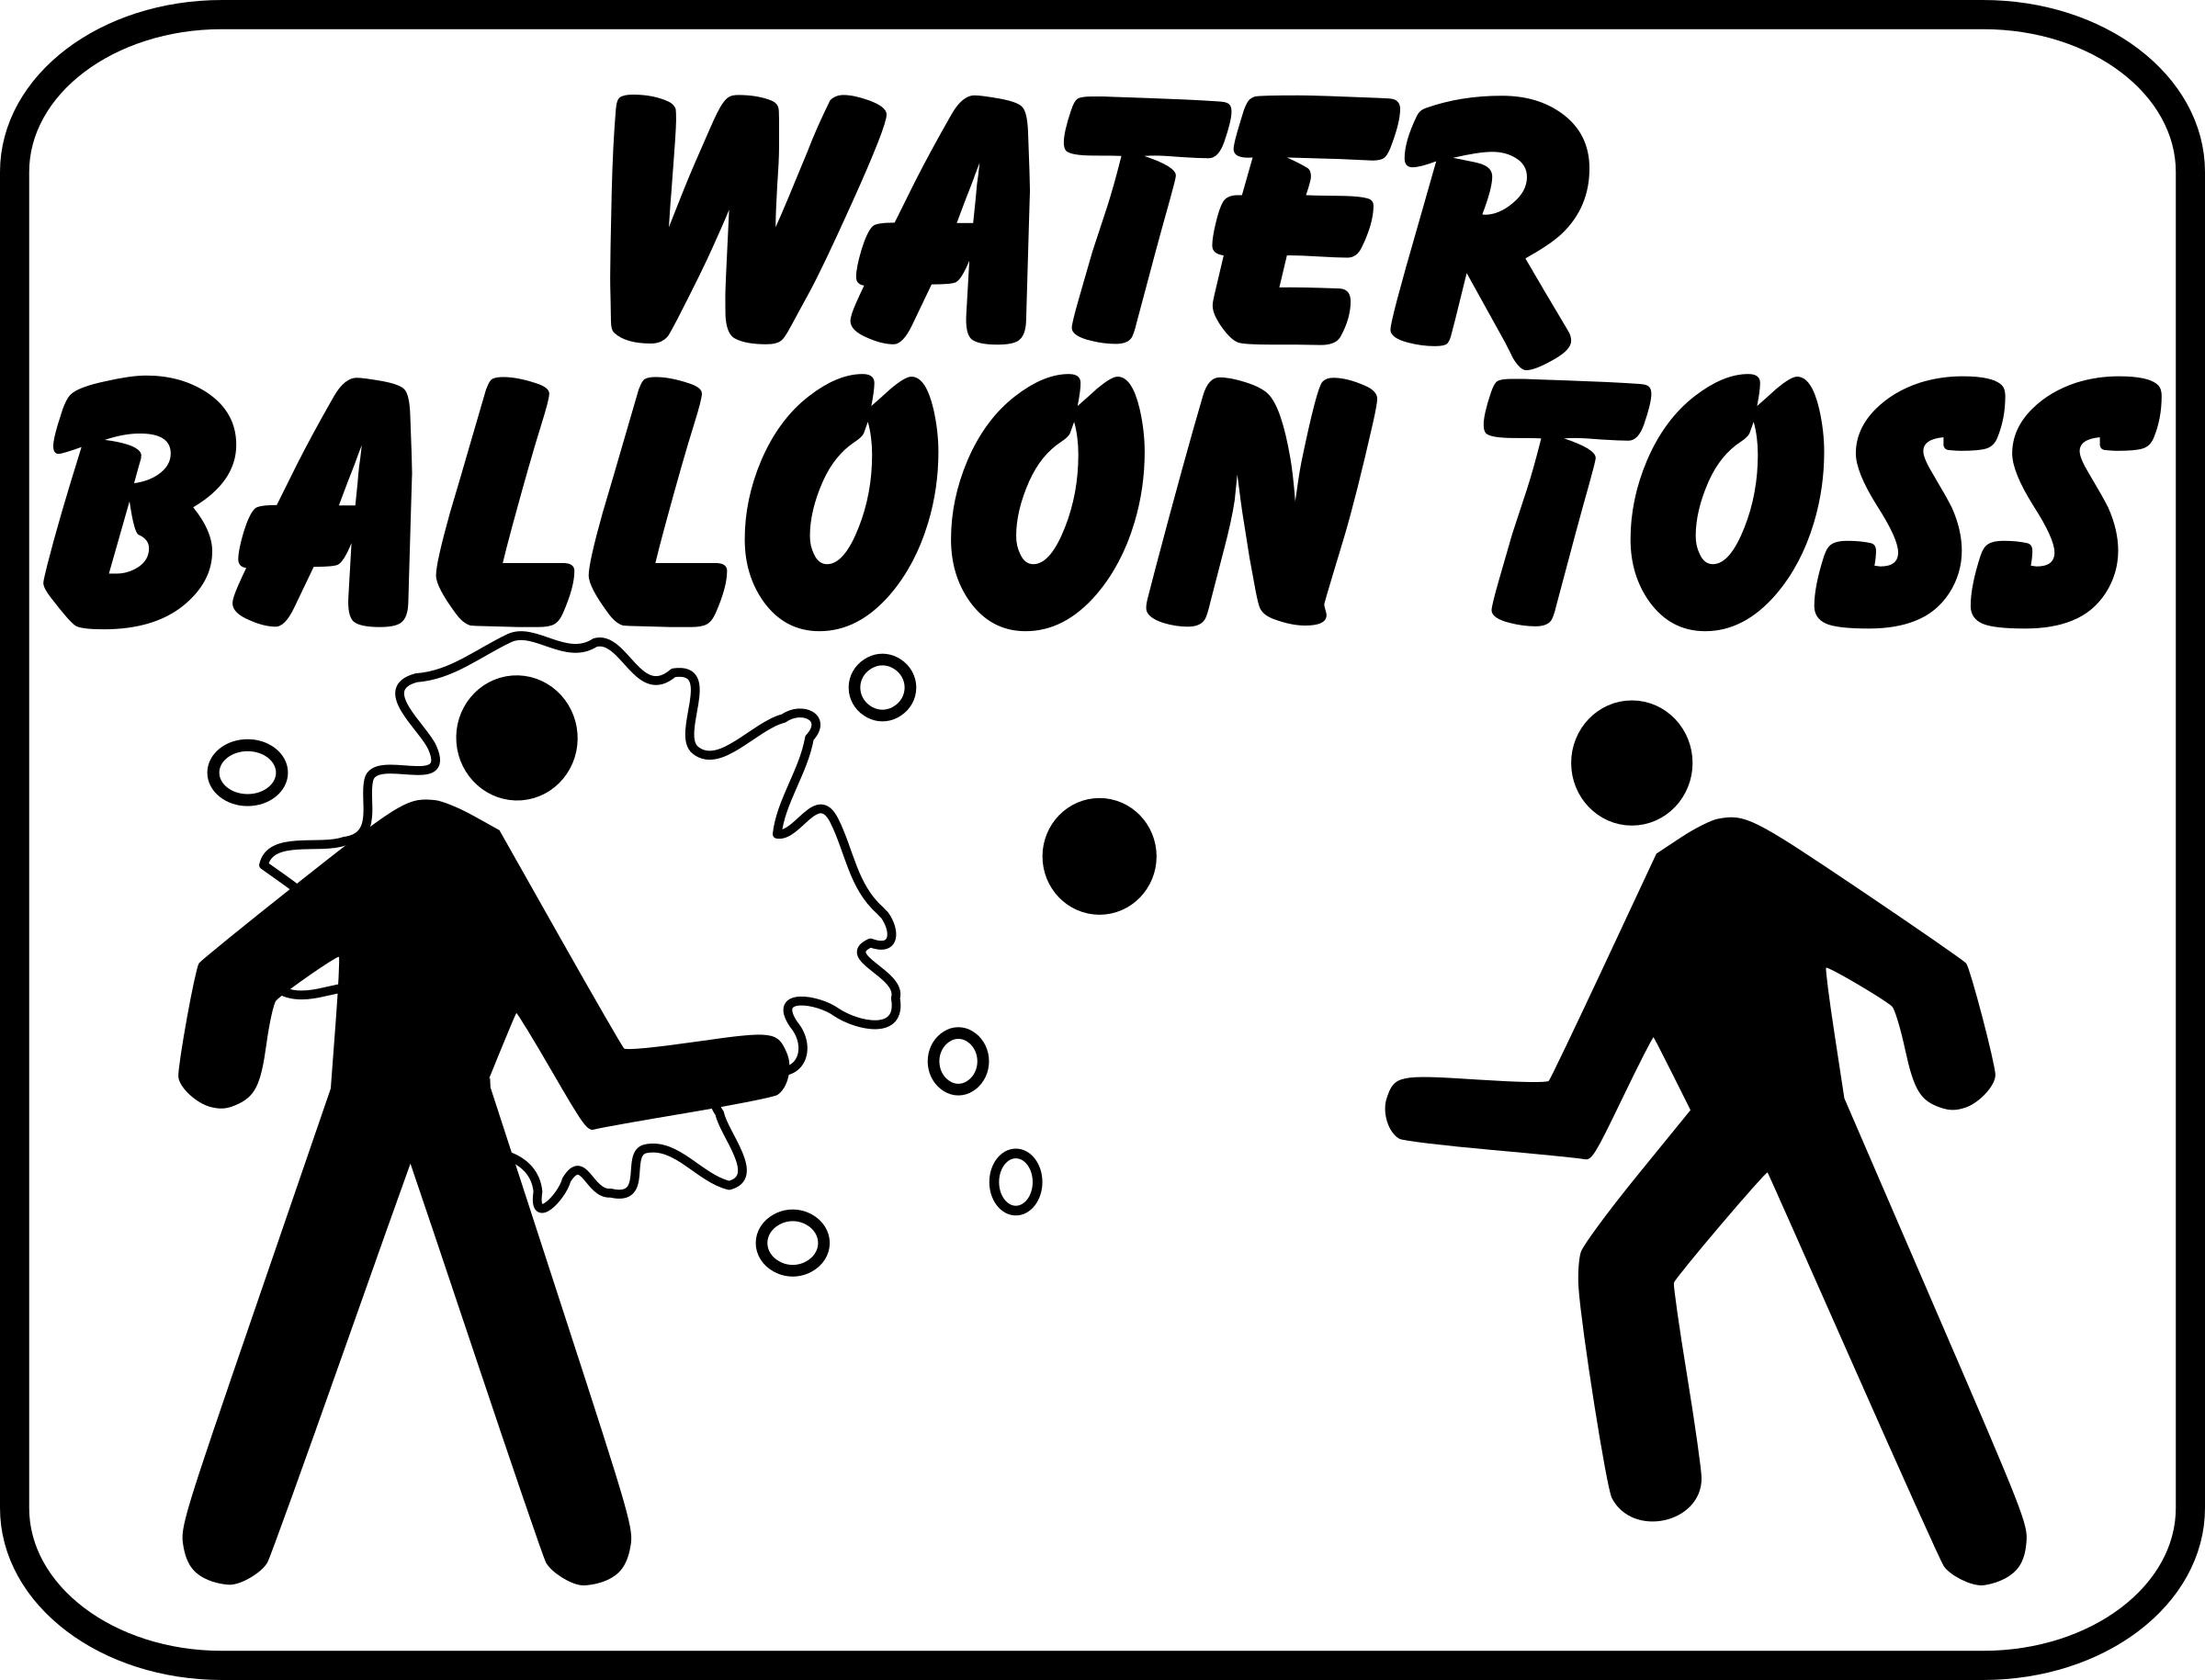 water balloon toss sign png